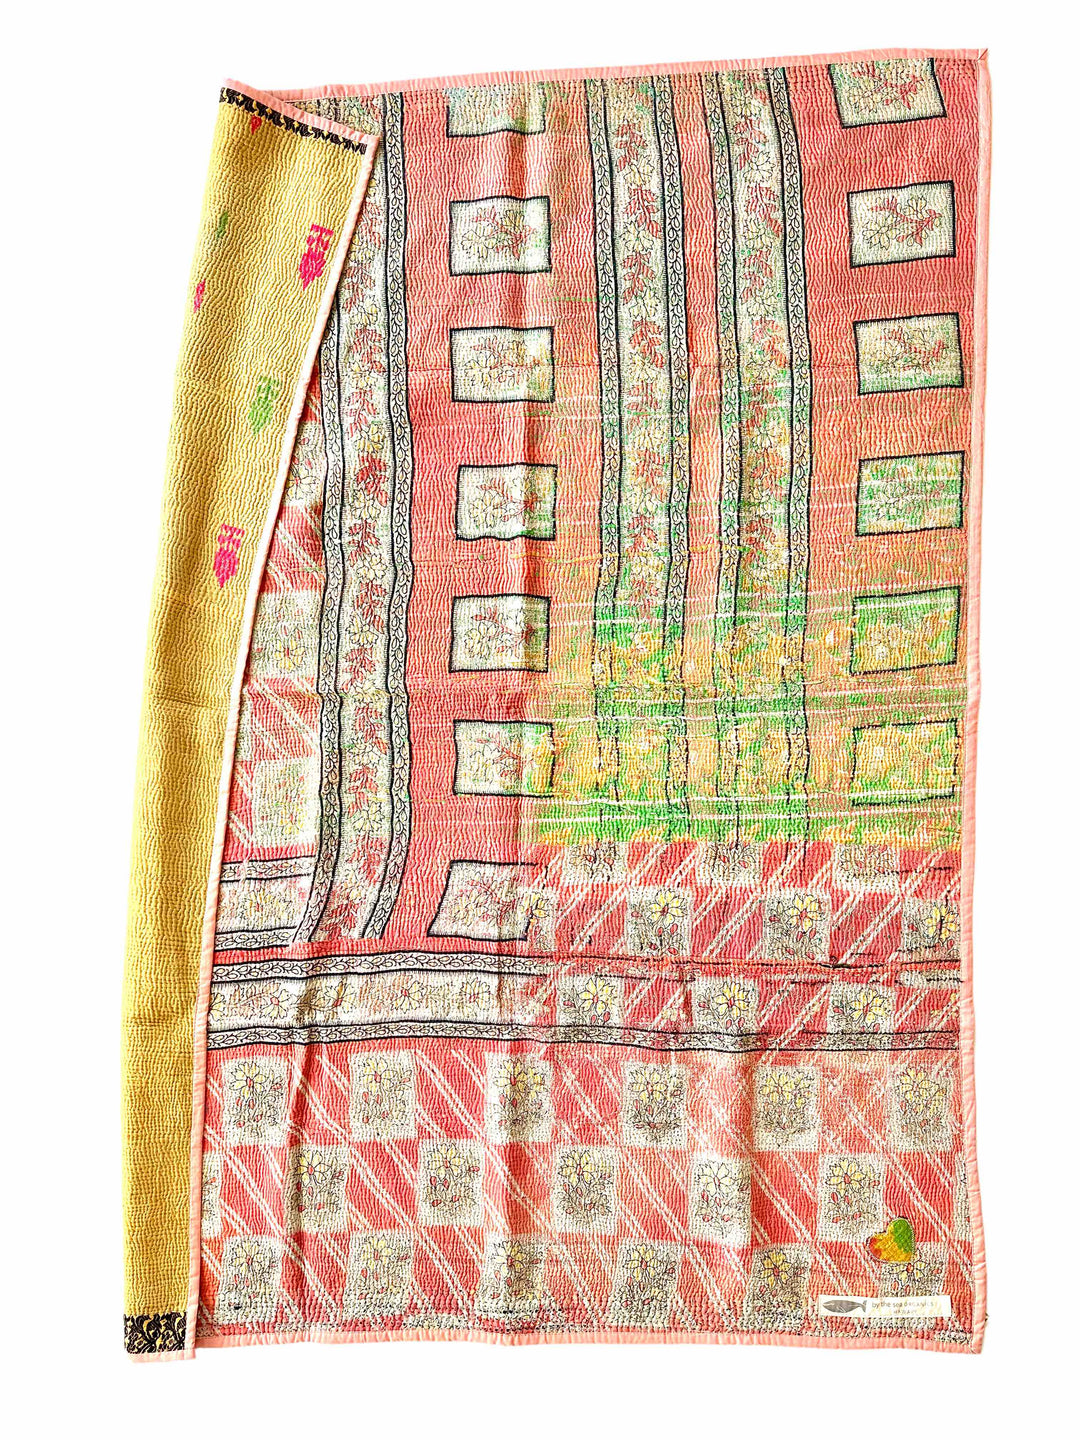 Rose Gold- Portable Kantha Quilt